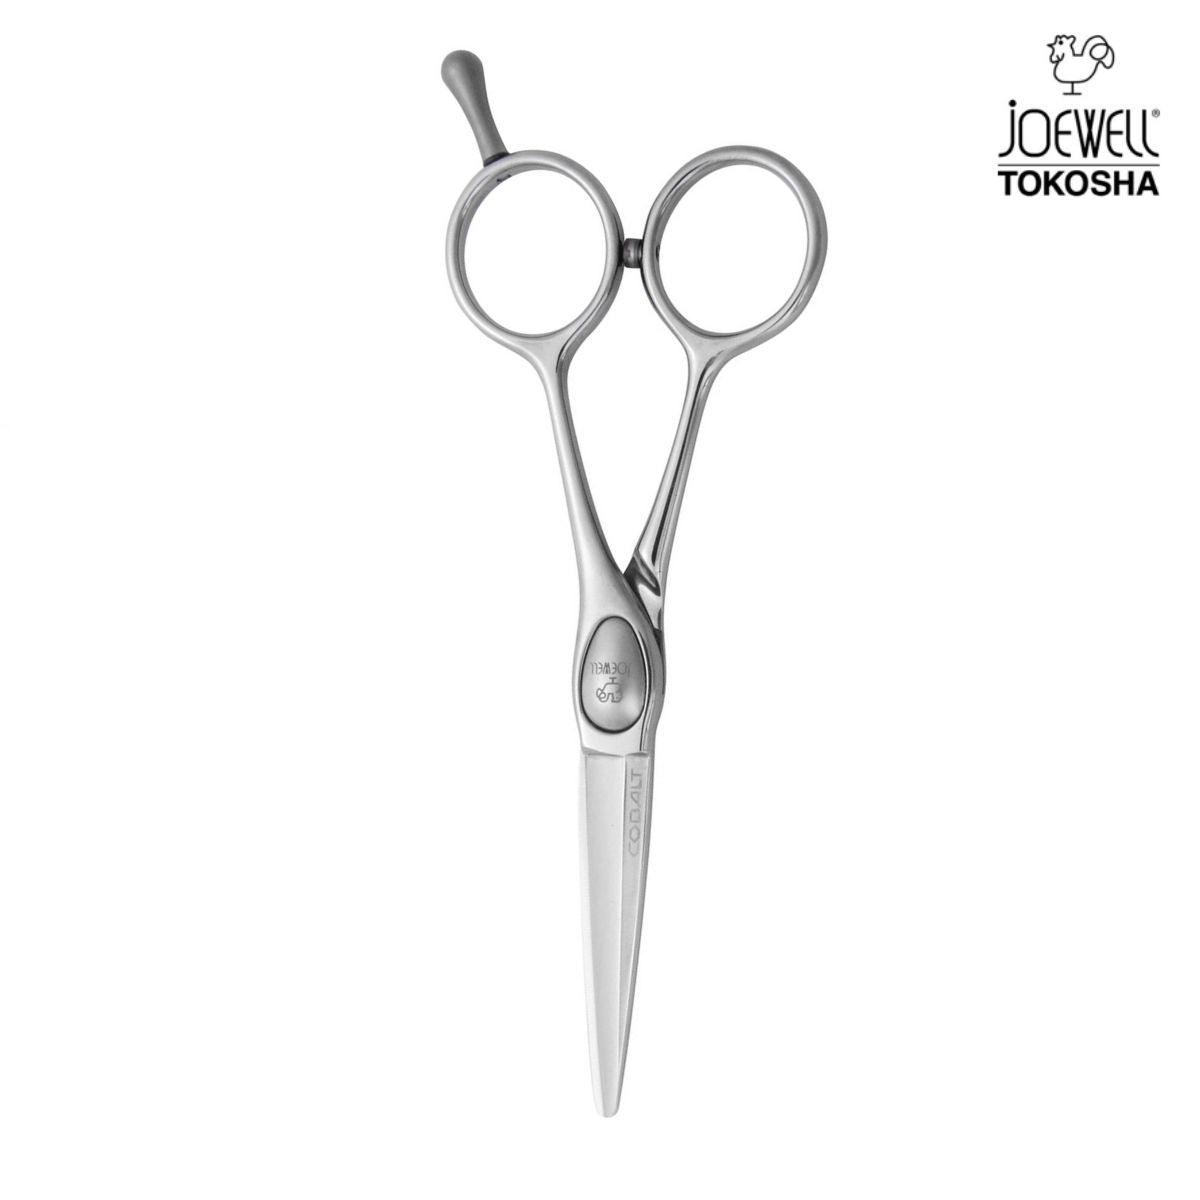 Joewell Supreme Sword Hair Scissor - Japan Scissors